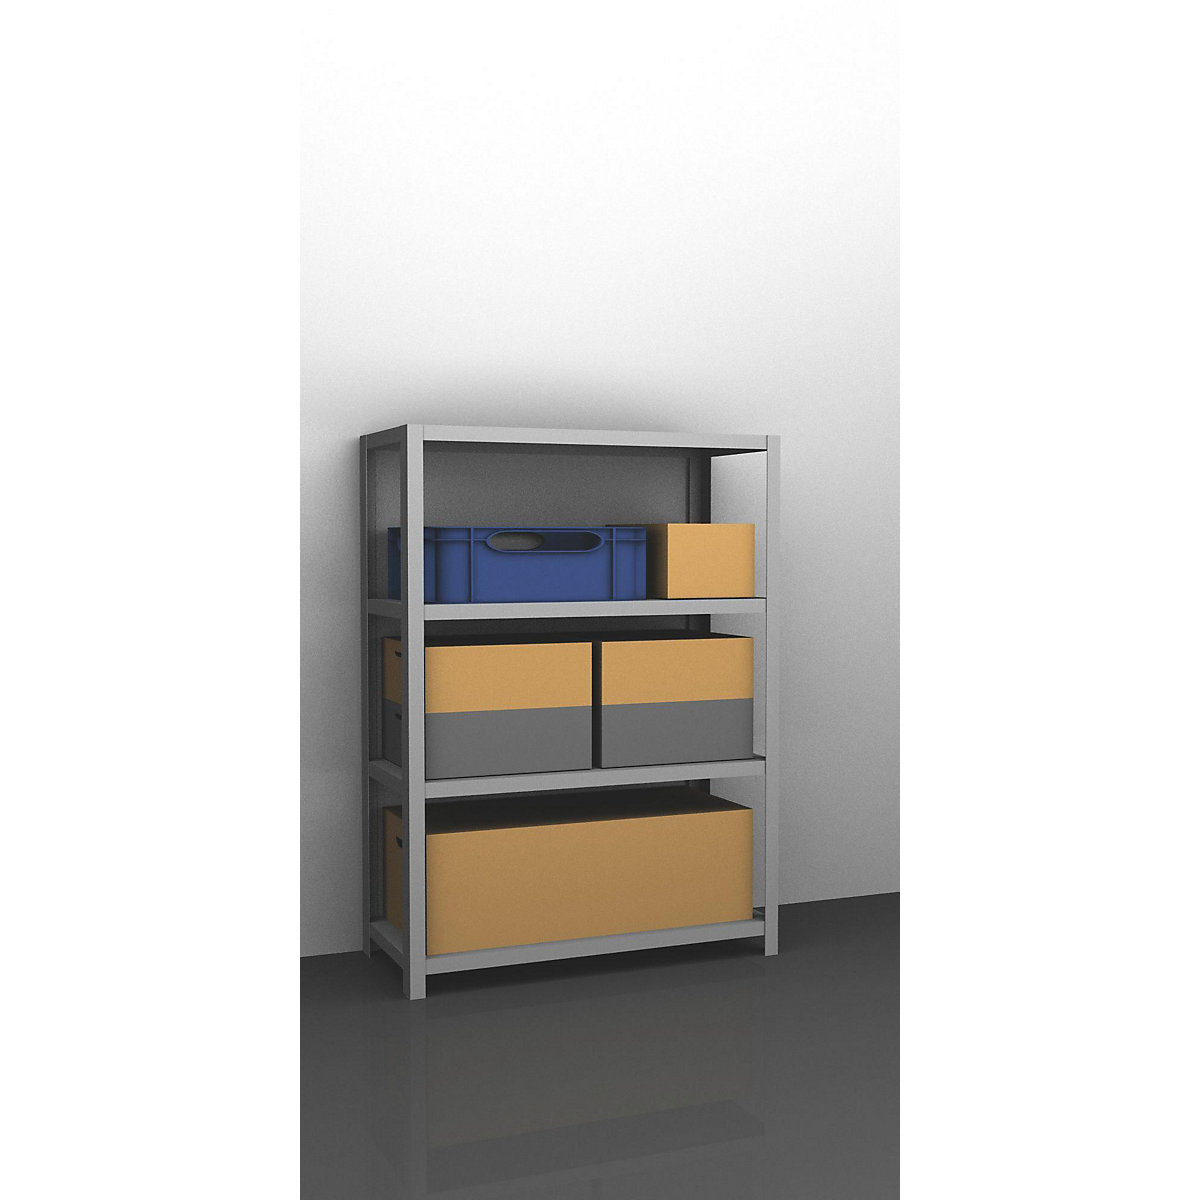 Bolt-together storage shelving, zinc plated, medium duty – eurokraft pro, shelf unit height 1500 mm, shelf width 1300 mm, depth 500 mm, standard shelf unit-12